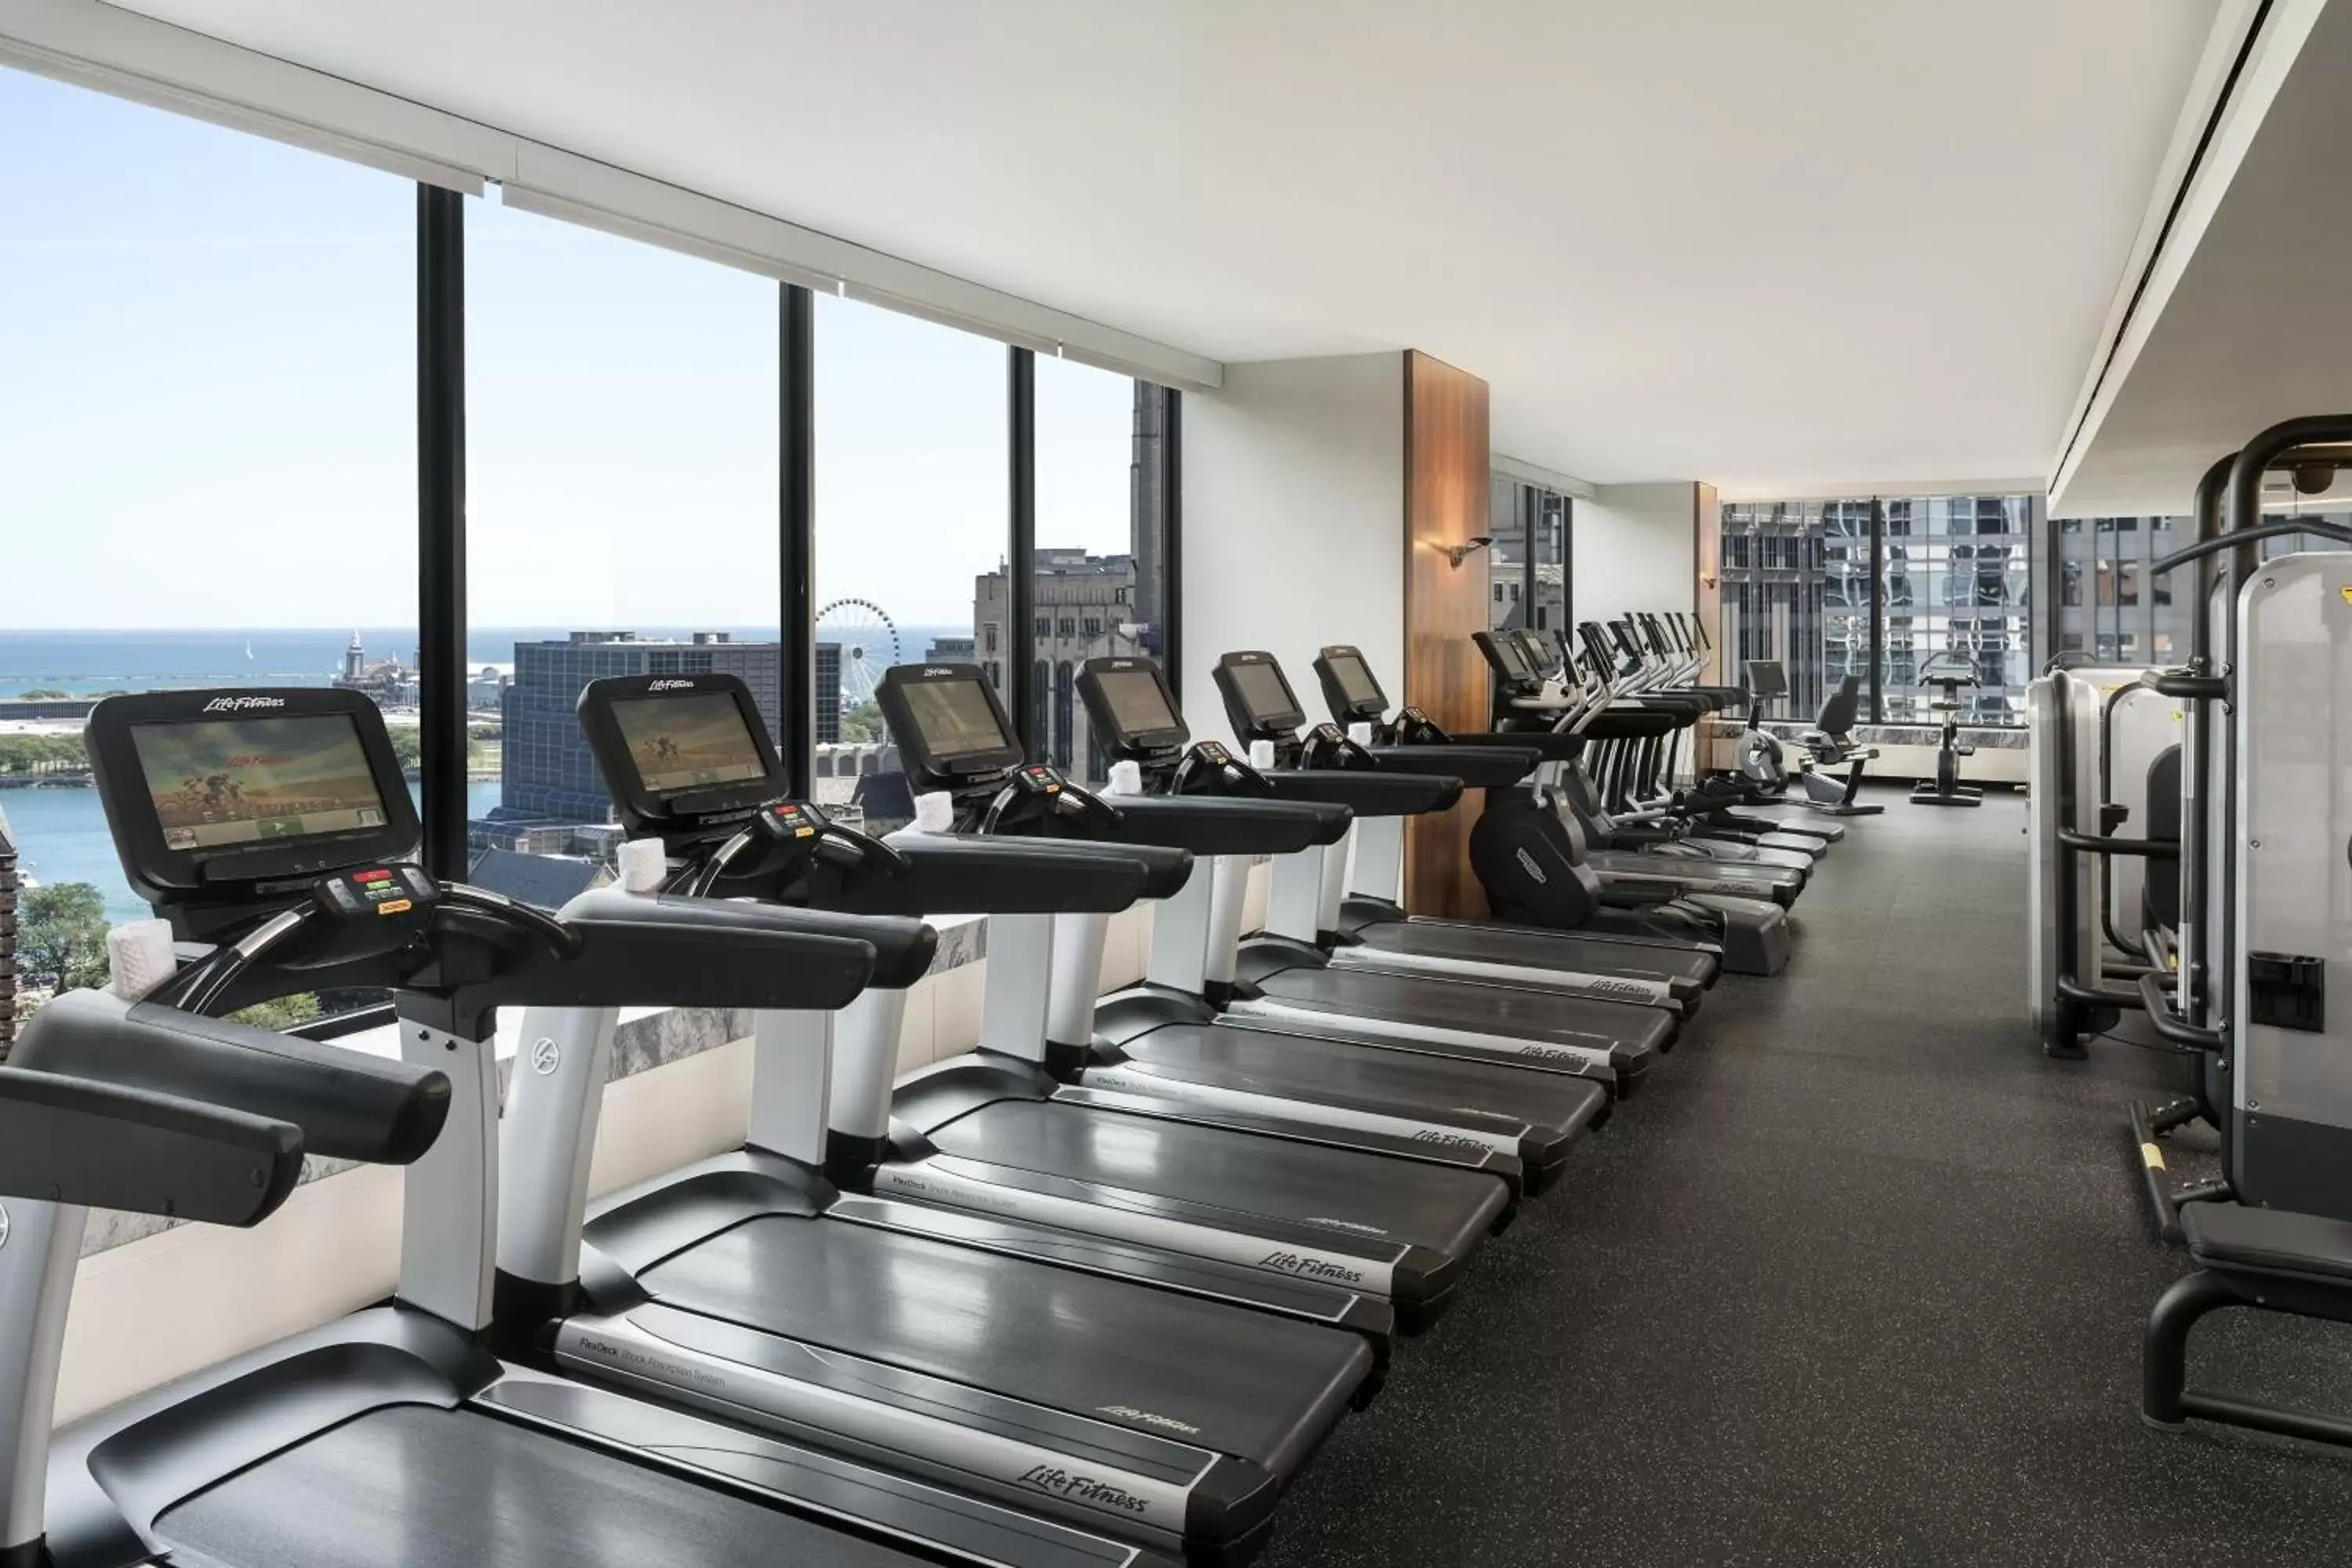 Fitness centre/facilities, Fitness Center/Facilities in The Ritz-Carlton, Chicago